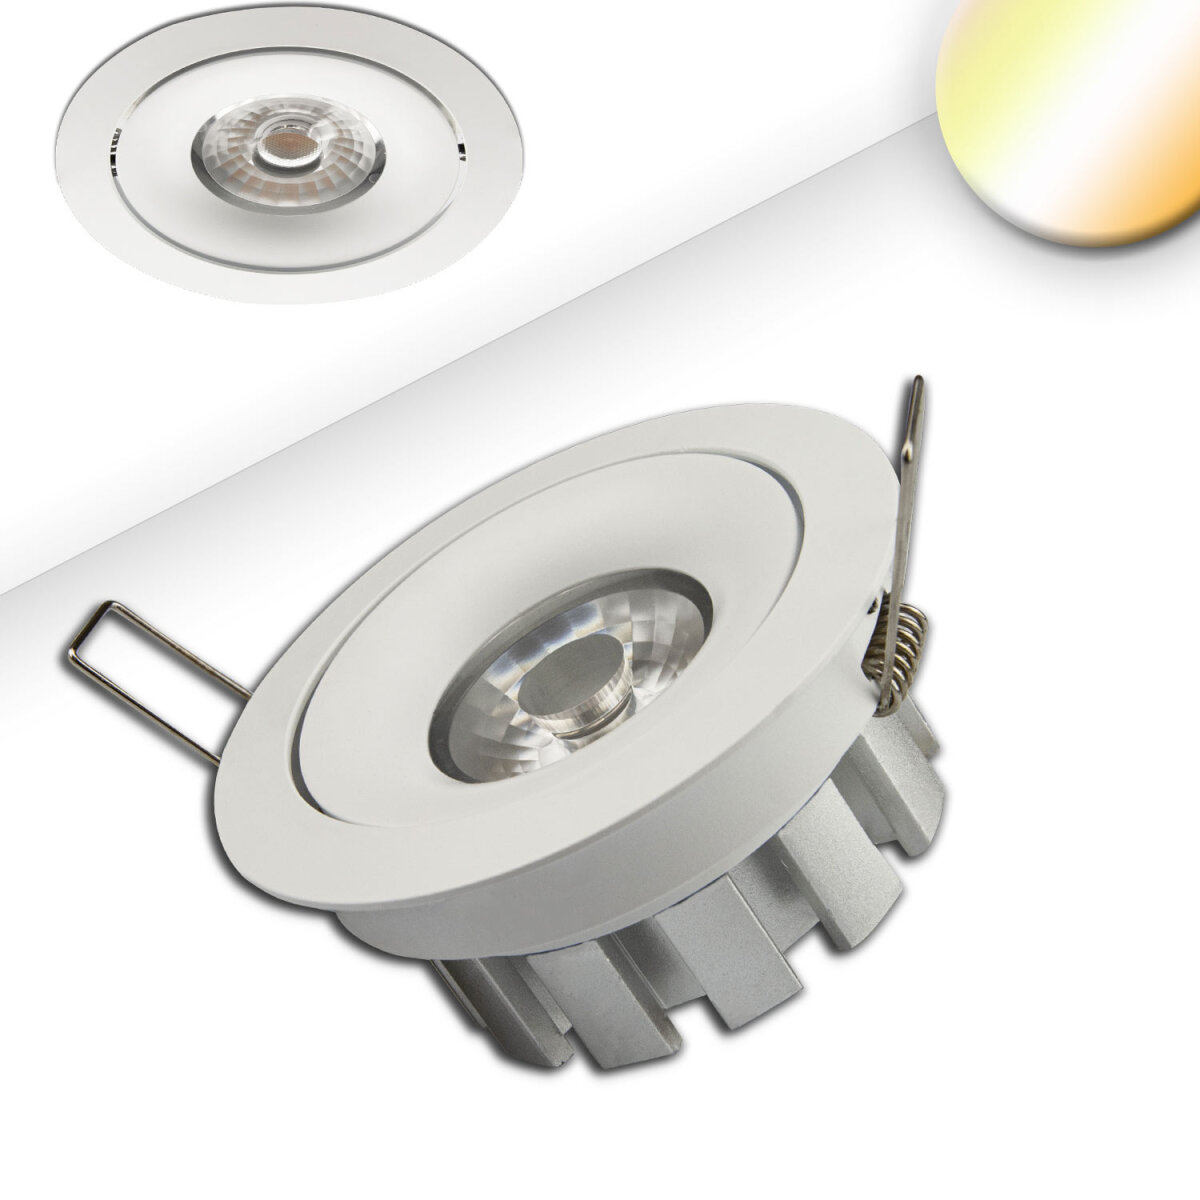 LED Einbaustrahler SUNSET, weiß, 15W, 45°, 2200-3100K, Dimm-to-warm -  LEDXess Innovative Beleuchtungstechnik, 65,49 €